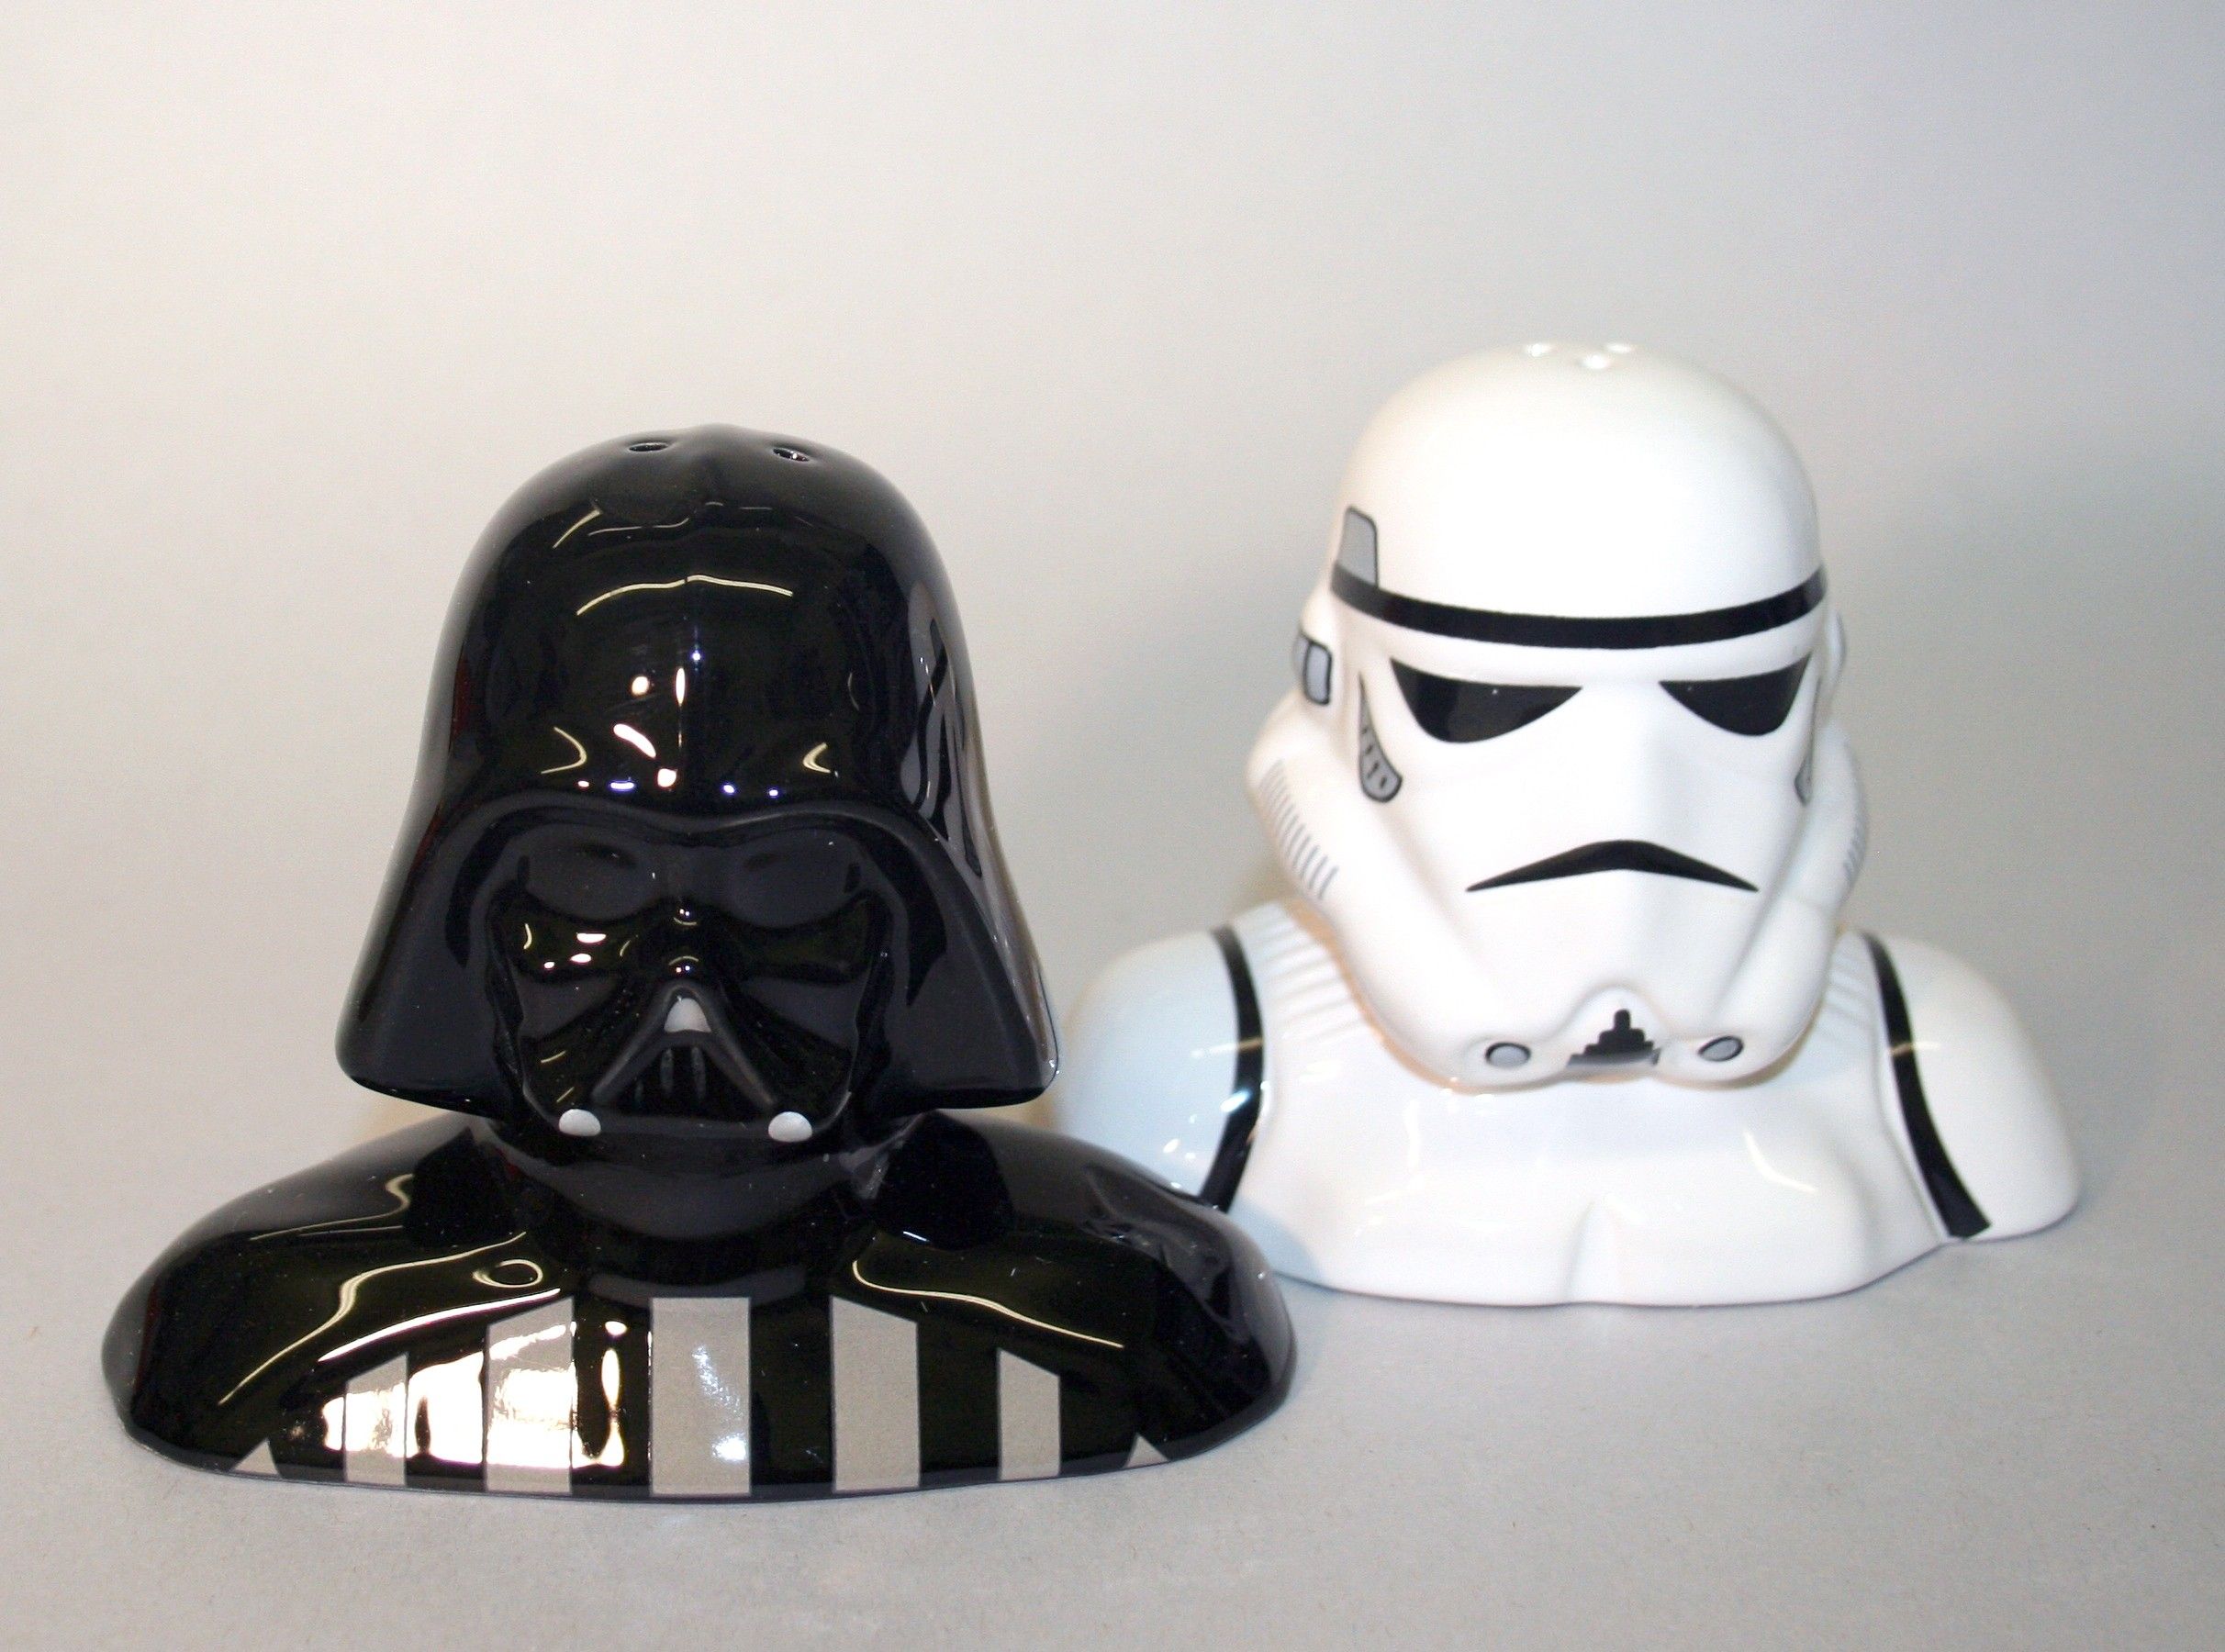 Star Wars Darth Vader and Storm Trooper Salt & Pepper Shakers